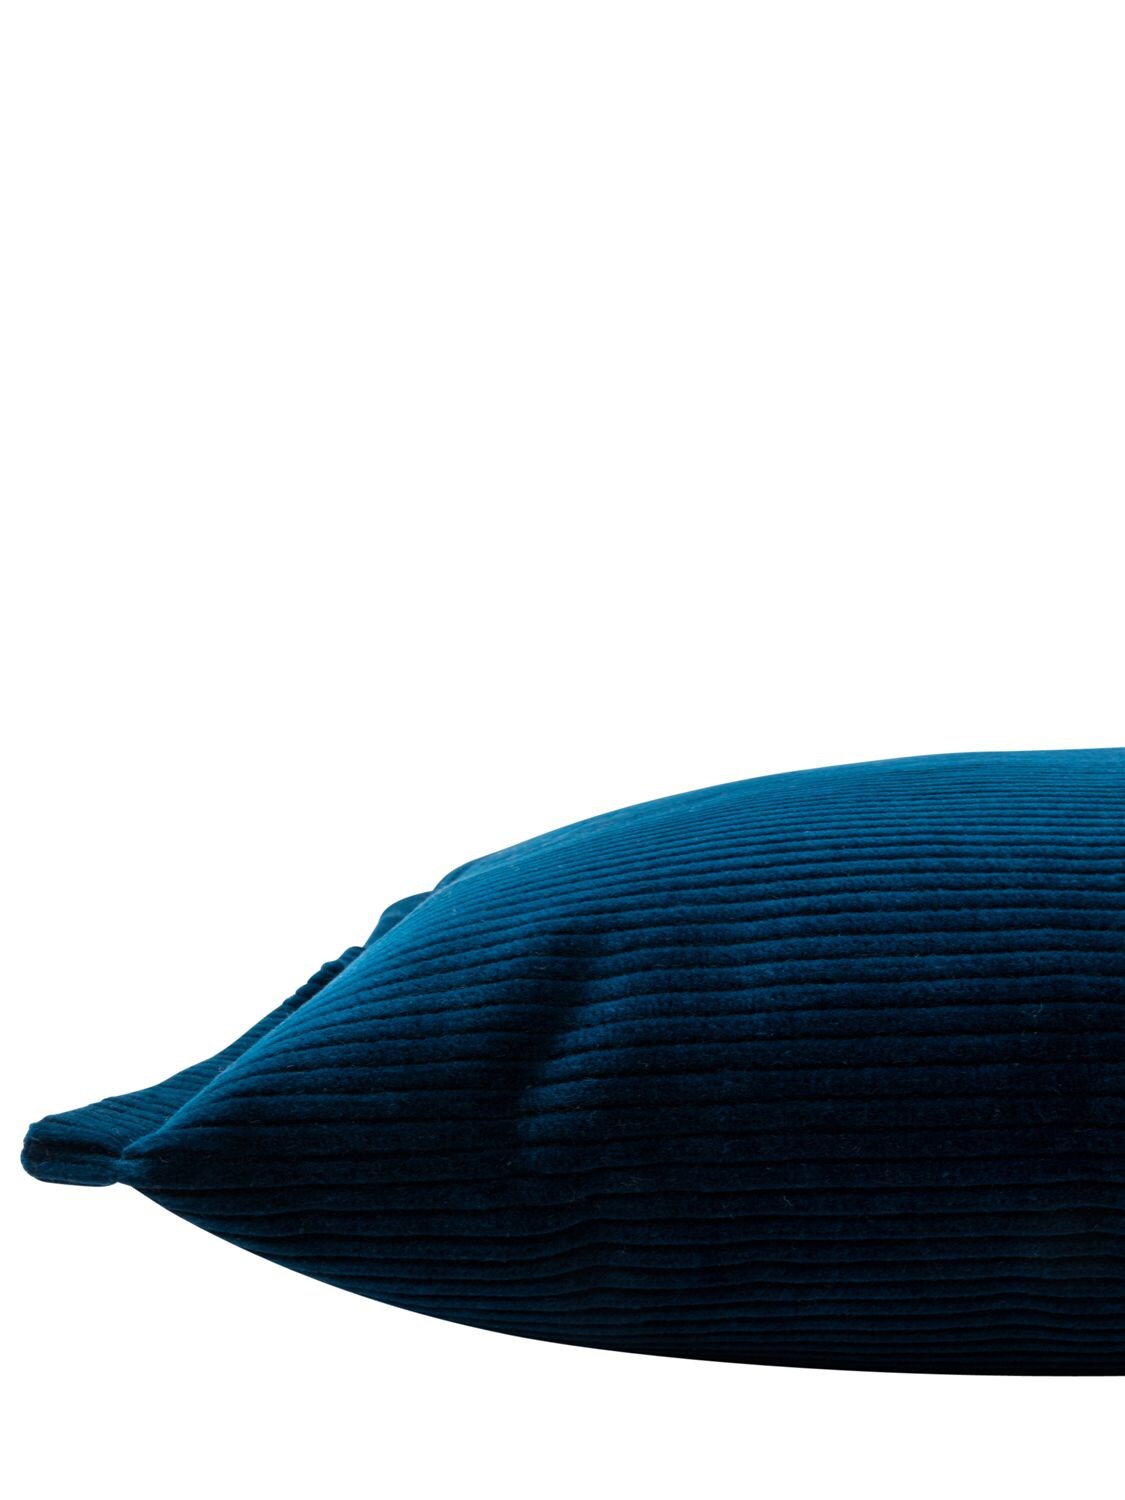 Shop Lanerossi Dueville Cotton Cushion In Blue